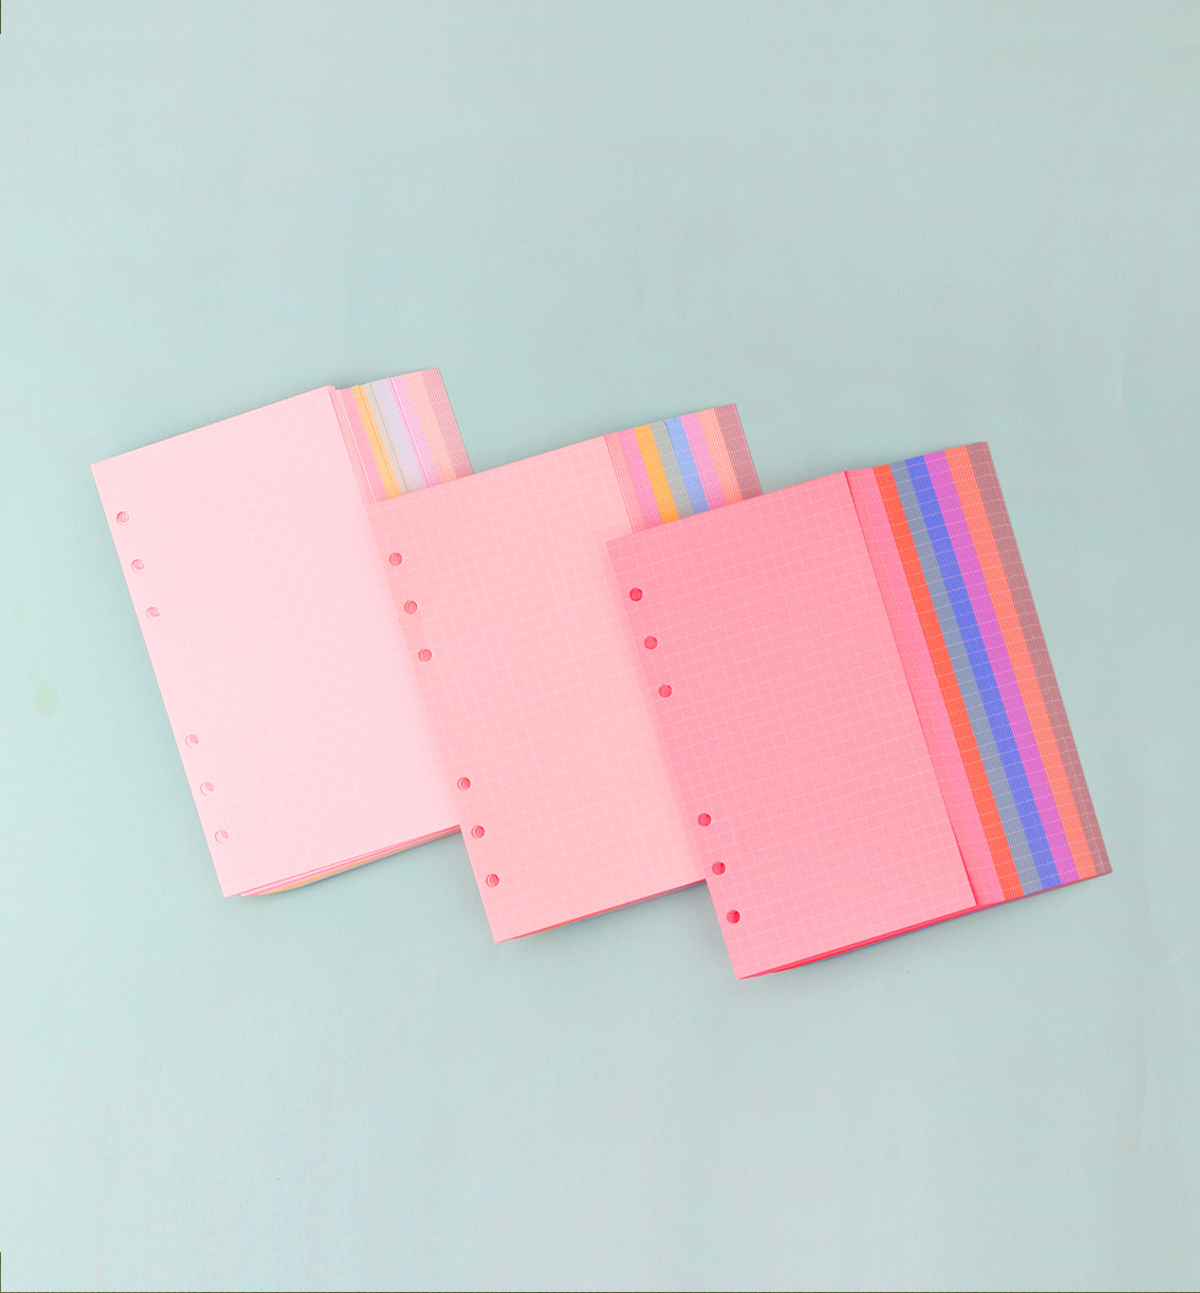 A6 Palette Grid Refill Paper